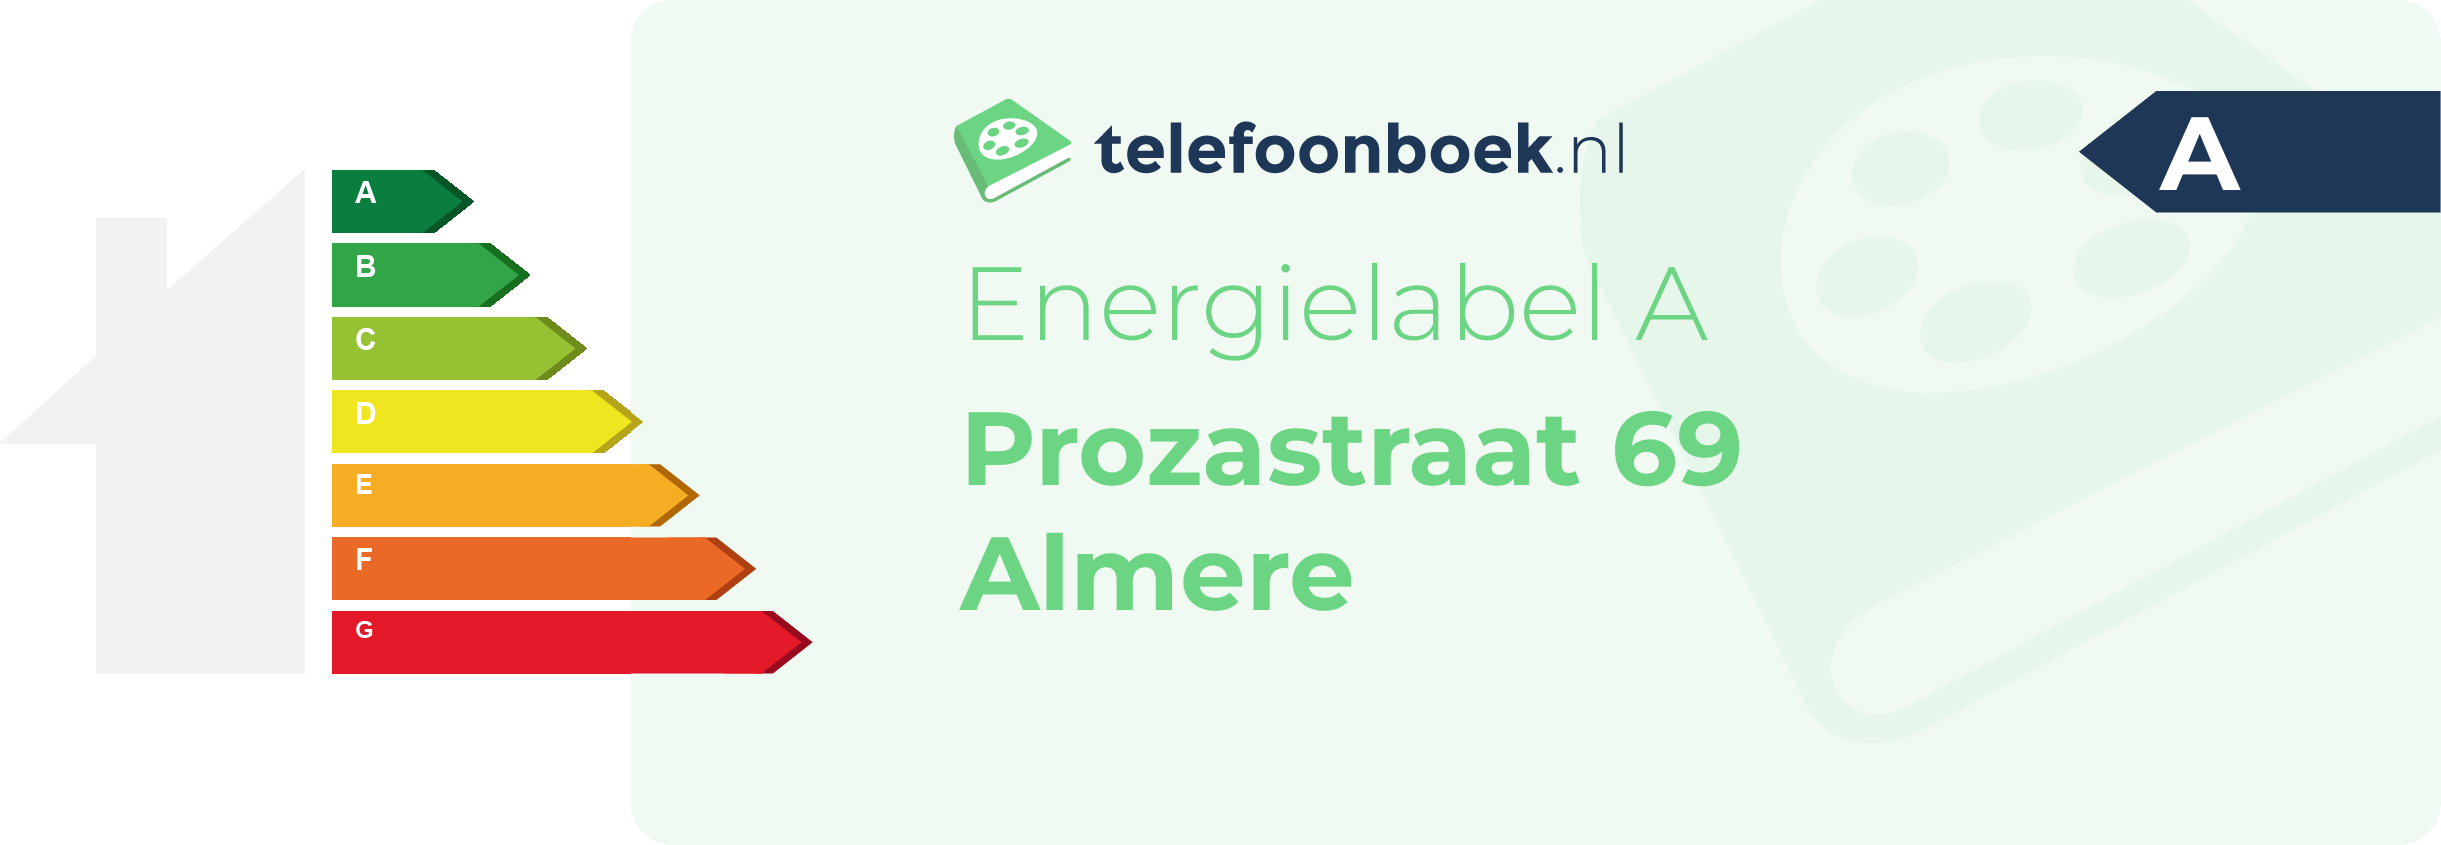 Energielabel Prozastraat 69 Almere